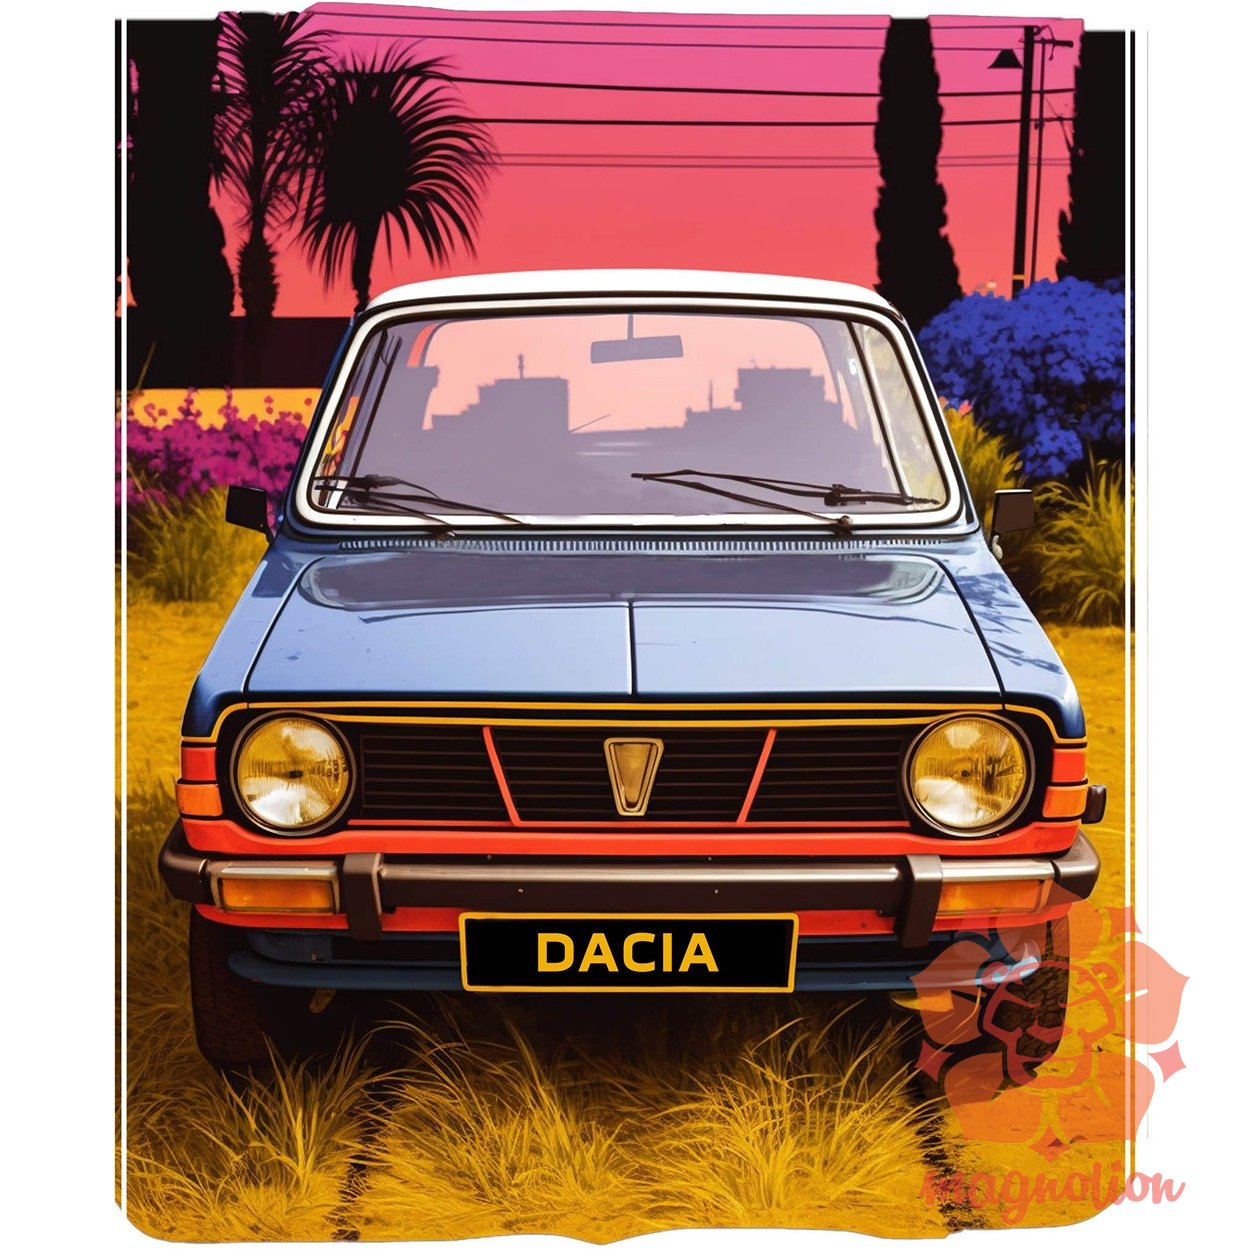 Dacia v1